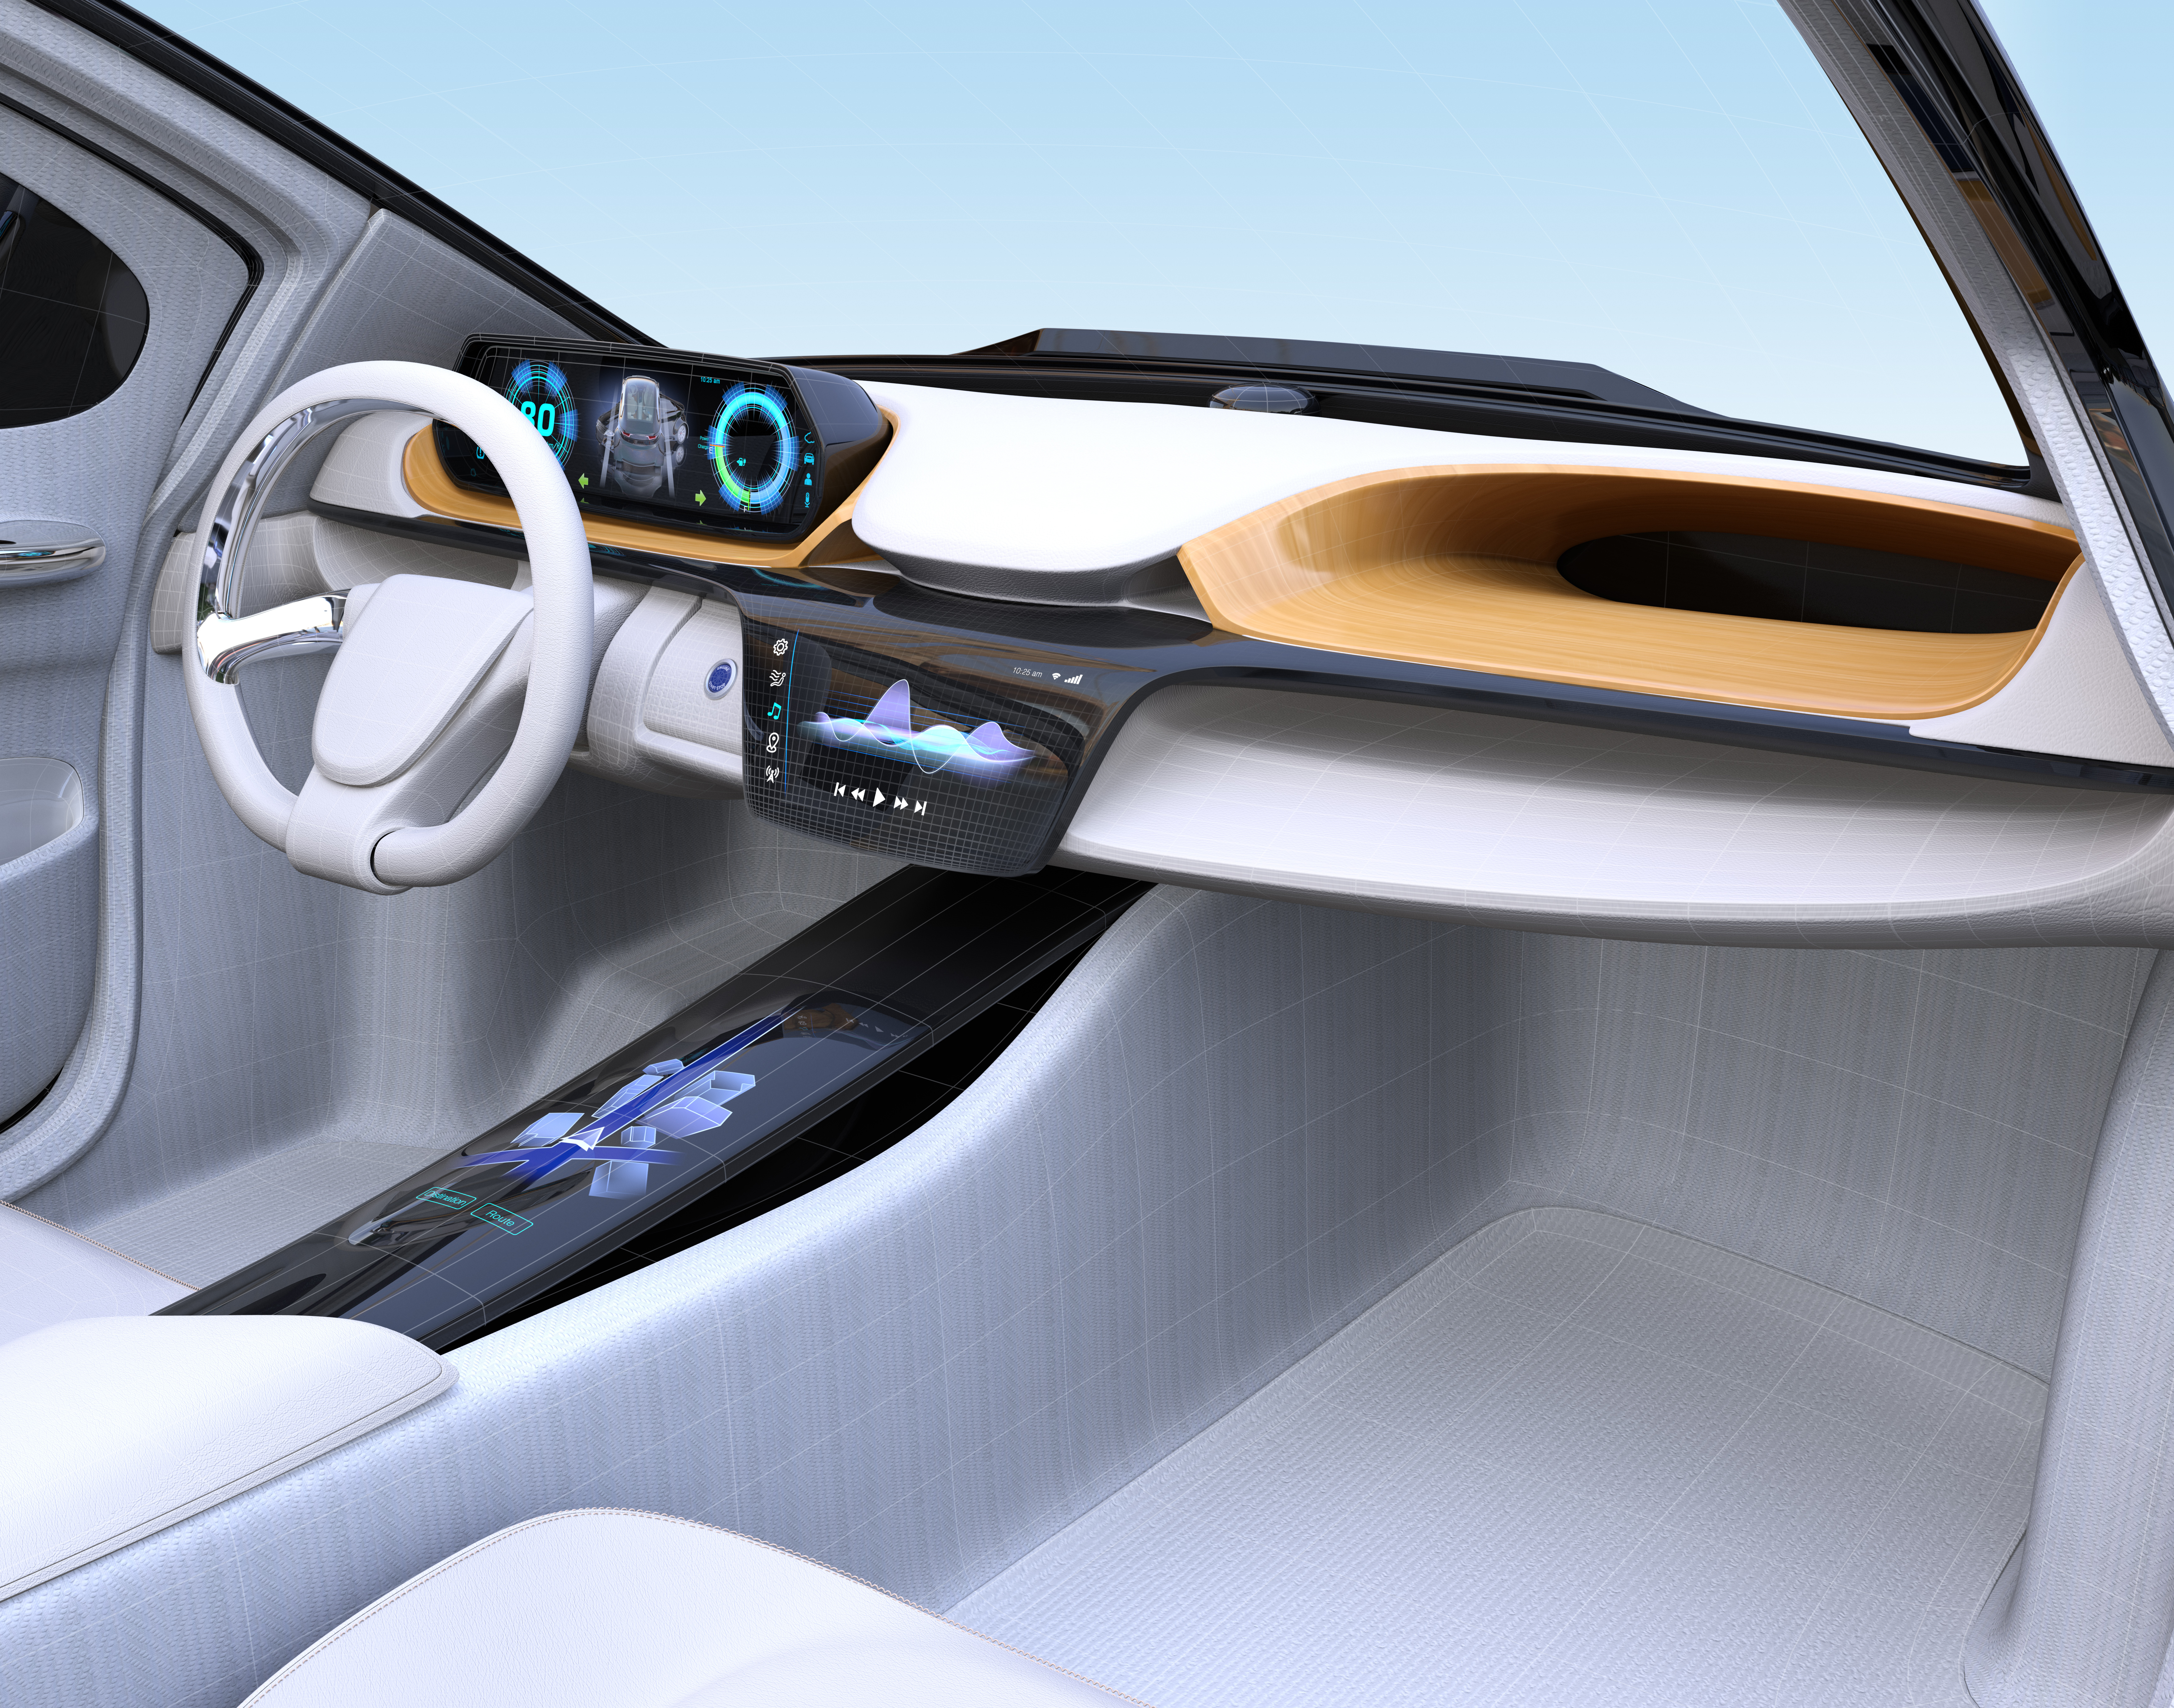 Automotive display futuristic free form format